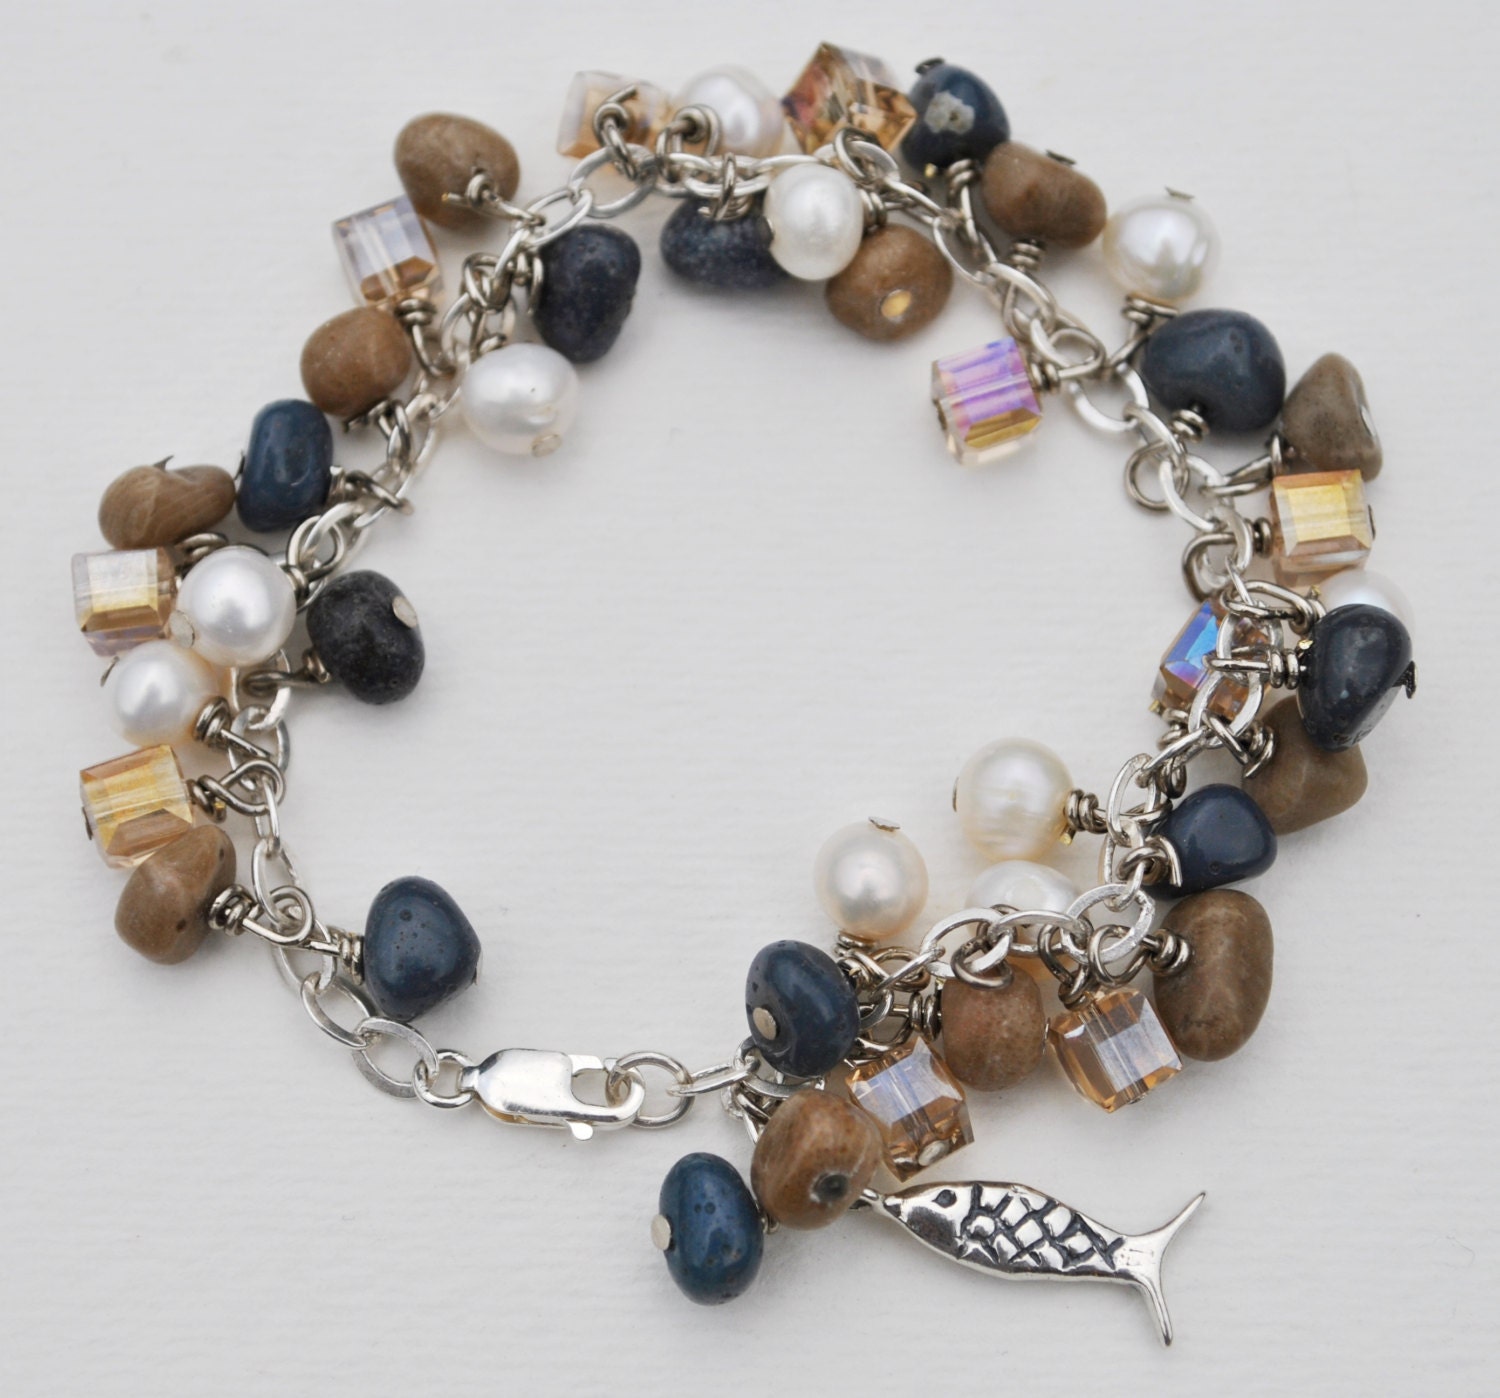 Sterling Silver Bracelet of Petoskey, Leland Blue Stones, and freshwater pearls, Lake Michigan Bracelet, Petoskey charm bracelet - Beechtree